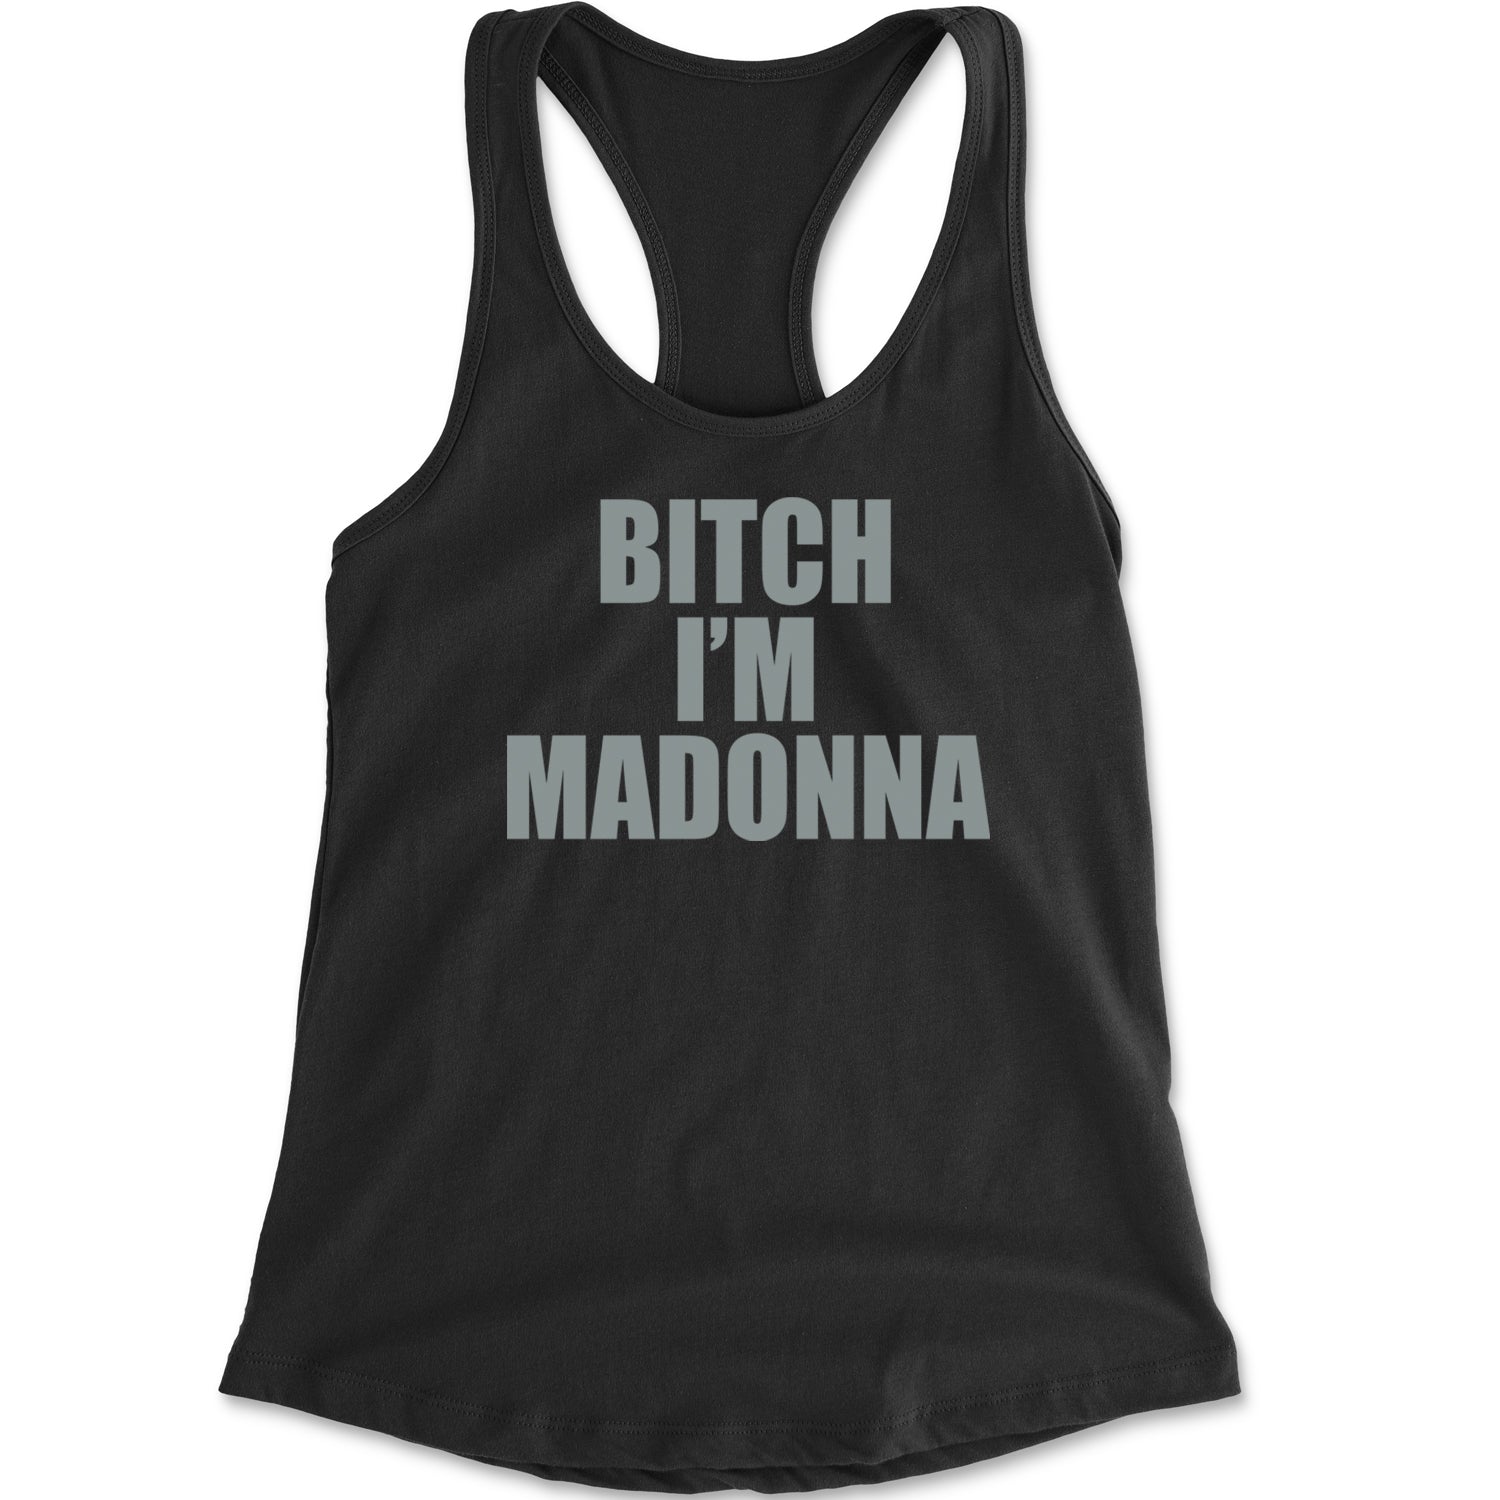 B-tch I'm Madonna Celebration Racerback Tank Top for Women